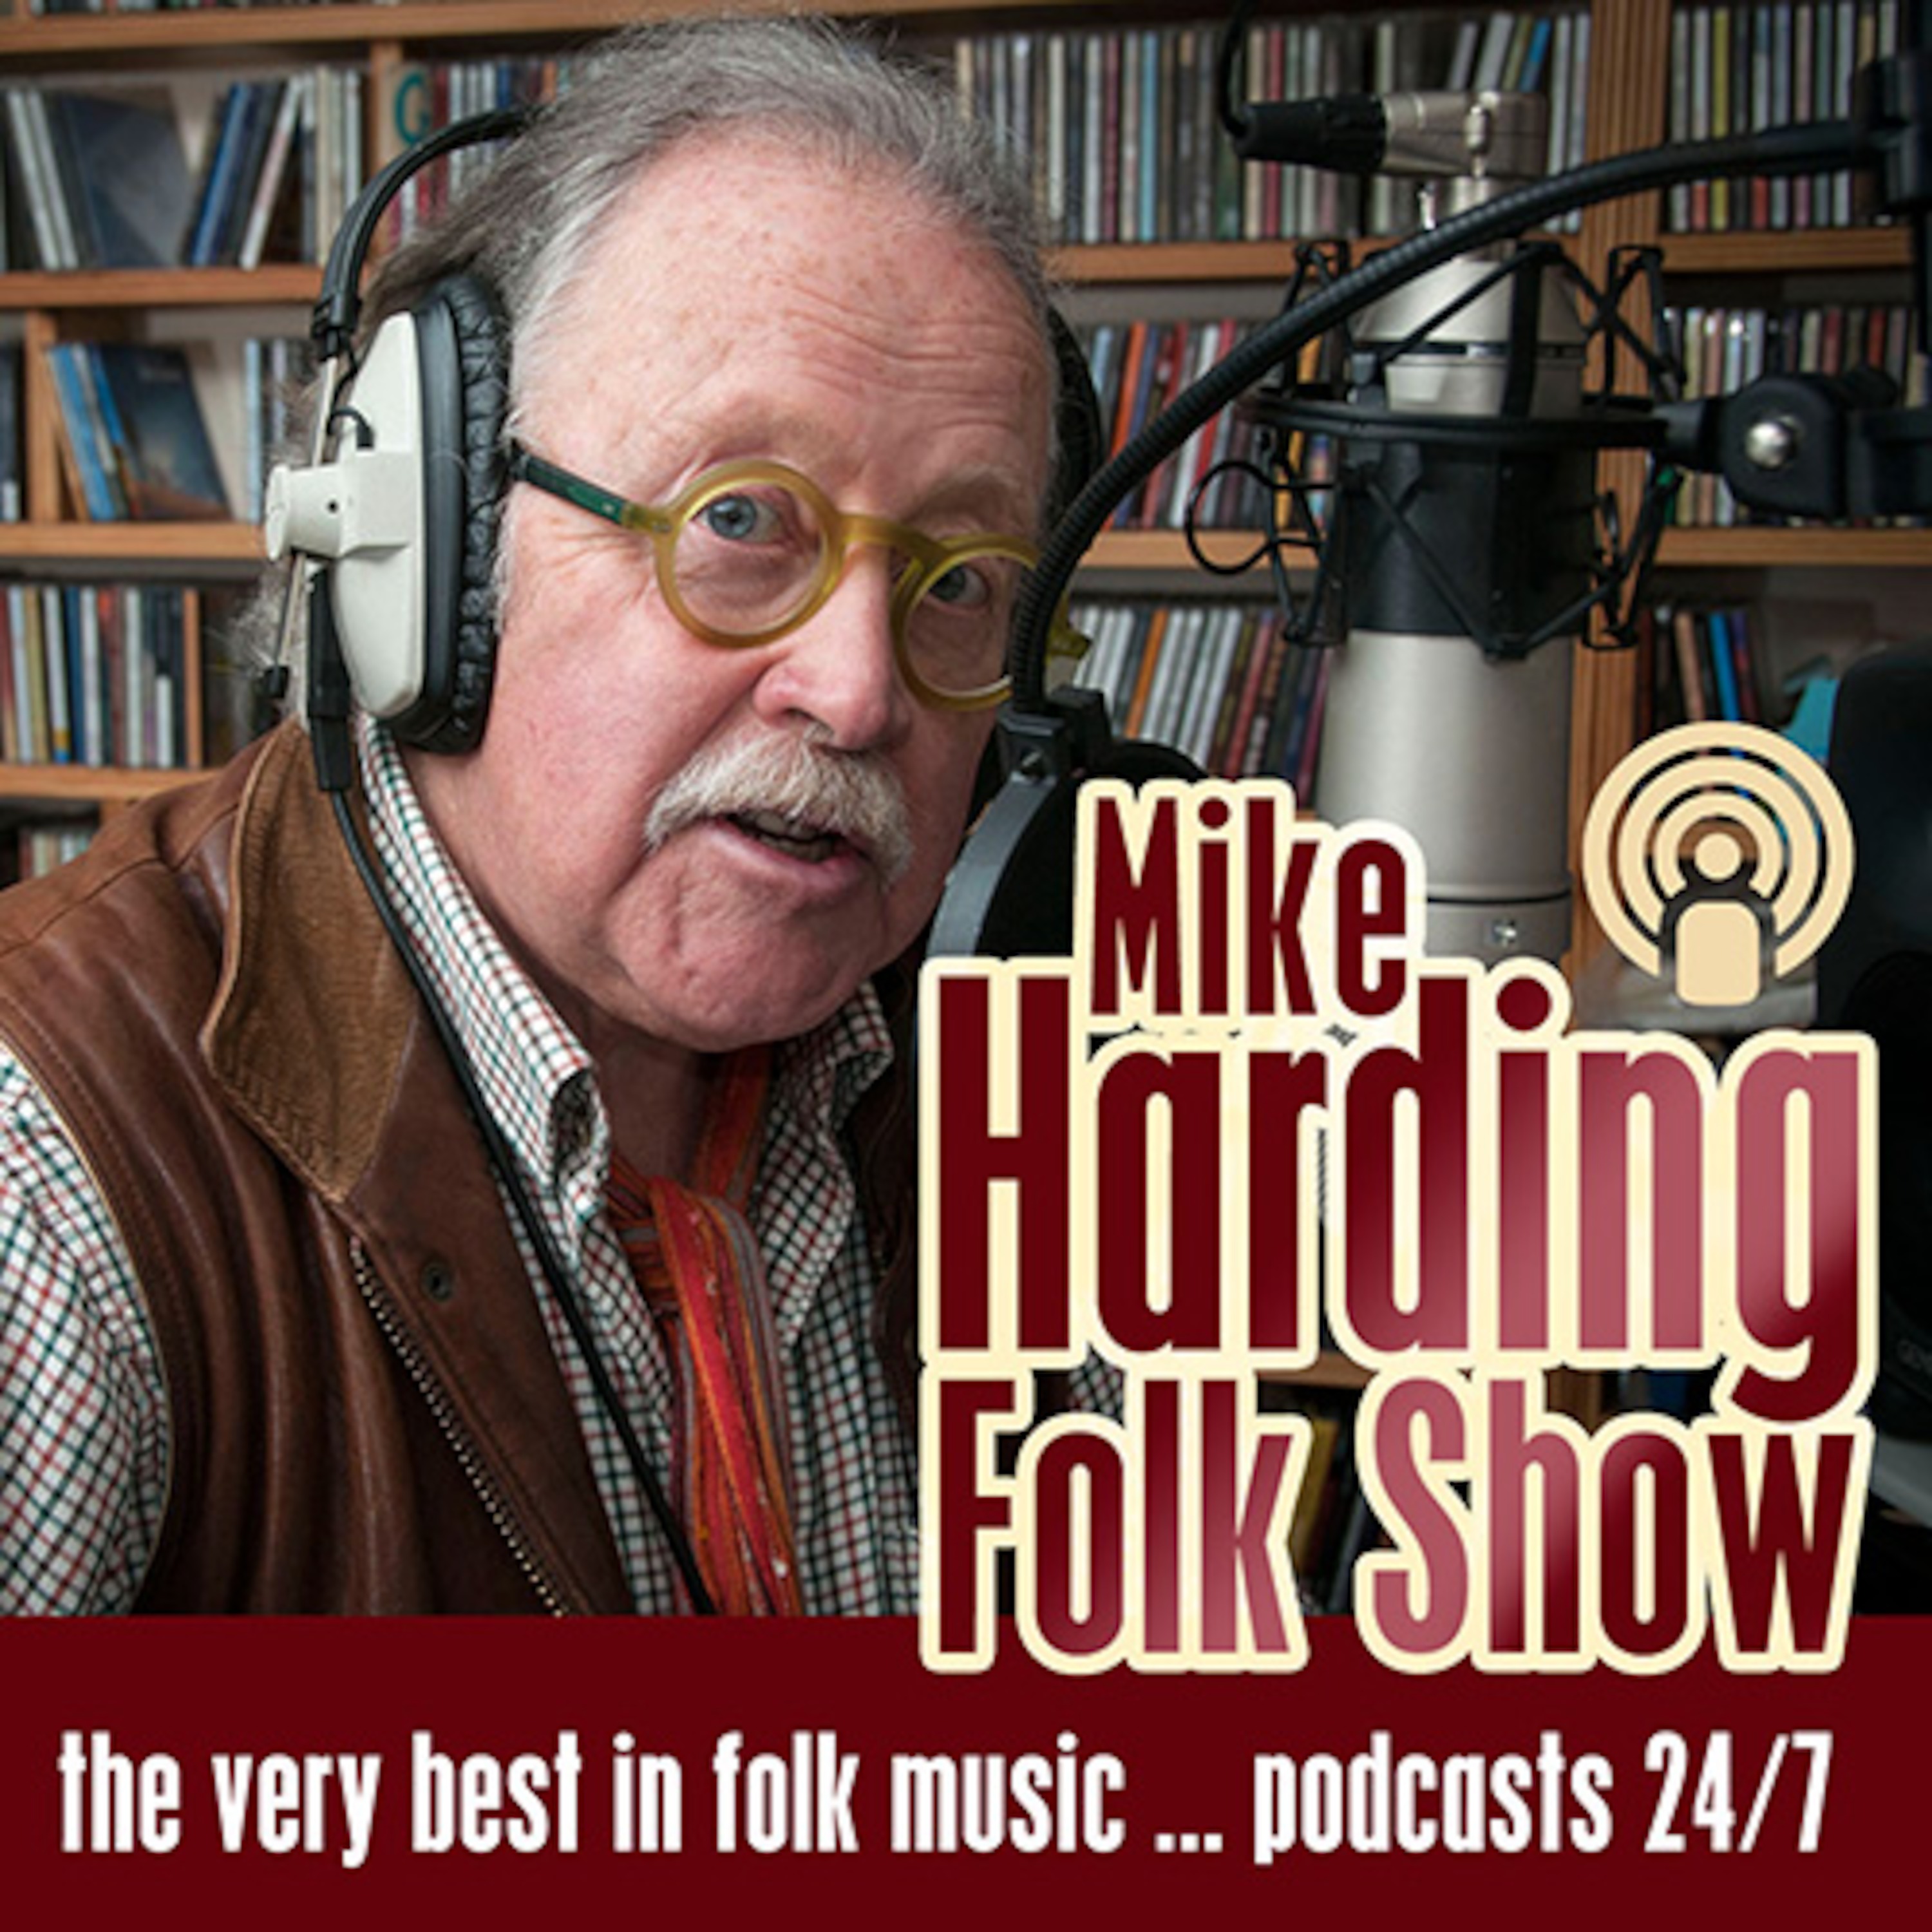 Mike Harding Folk Show 97